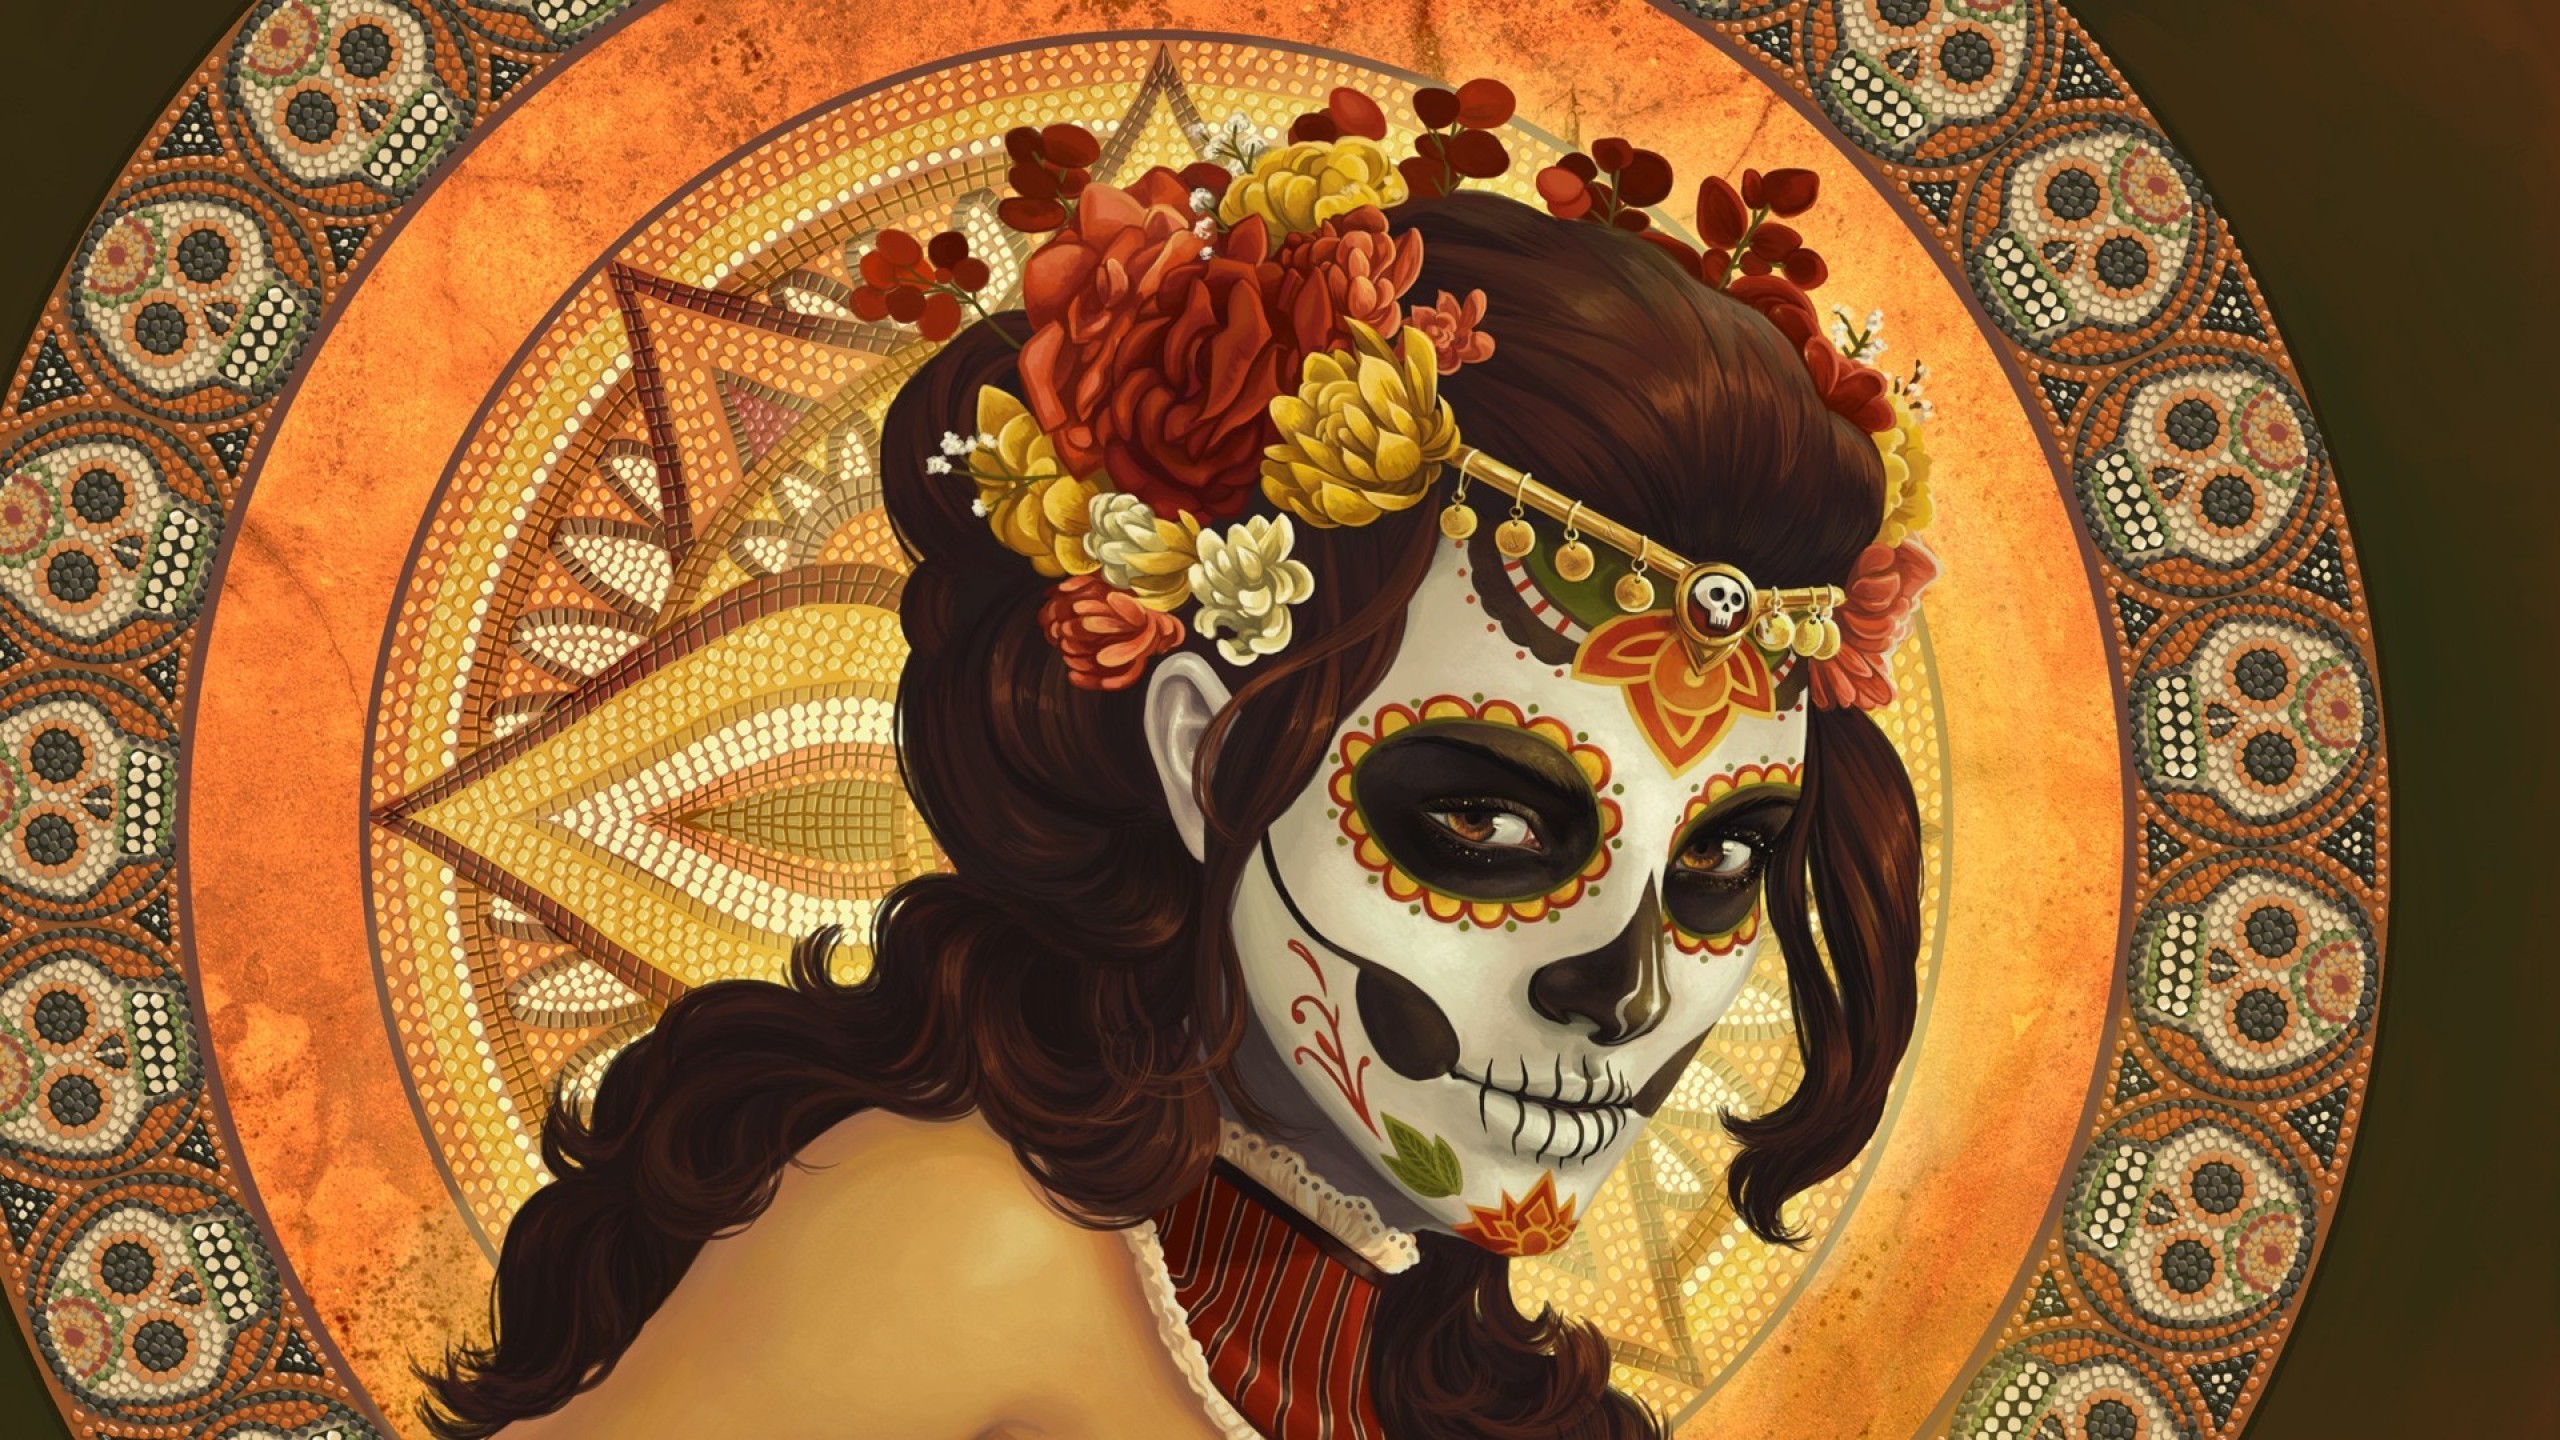 Wallpaper, 2560x1440 px, artwork, Dia de los Muertos, digital art, flowers, Mexico, mosaic, pattern, skull, Sugar Skull, women 2560x1440